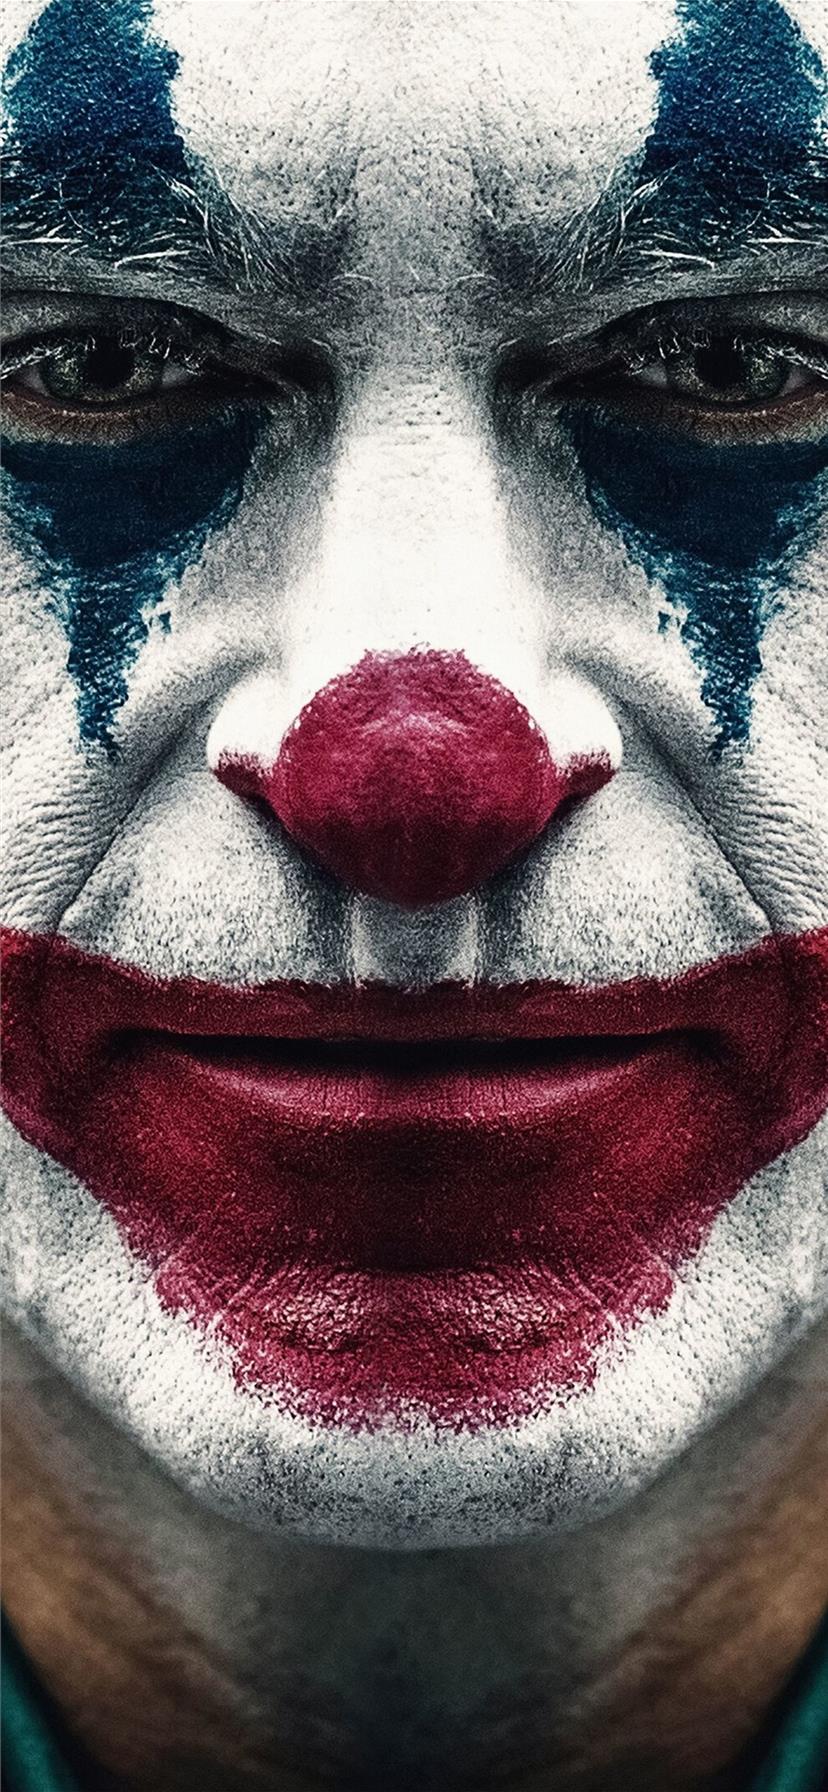 joker 2019 joaquin phoenix clown iPhone Wallpaper Free Download